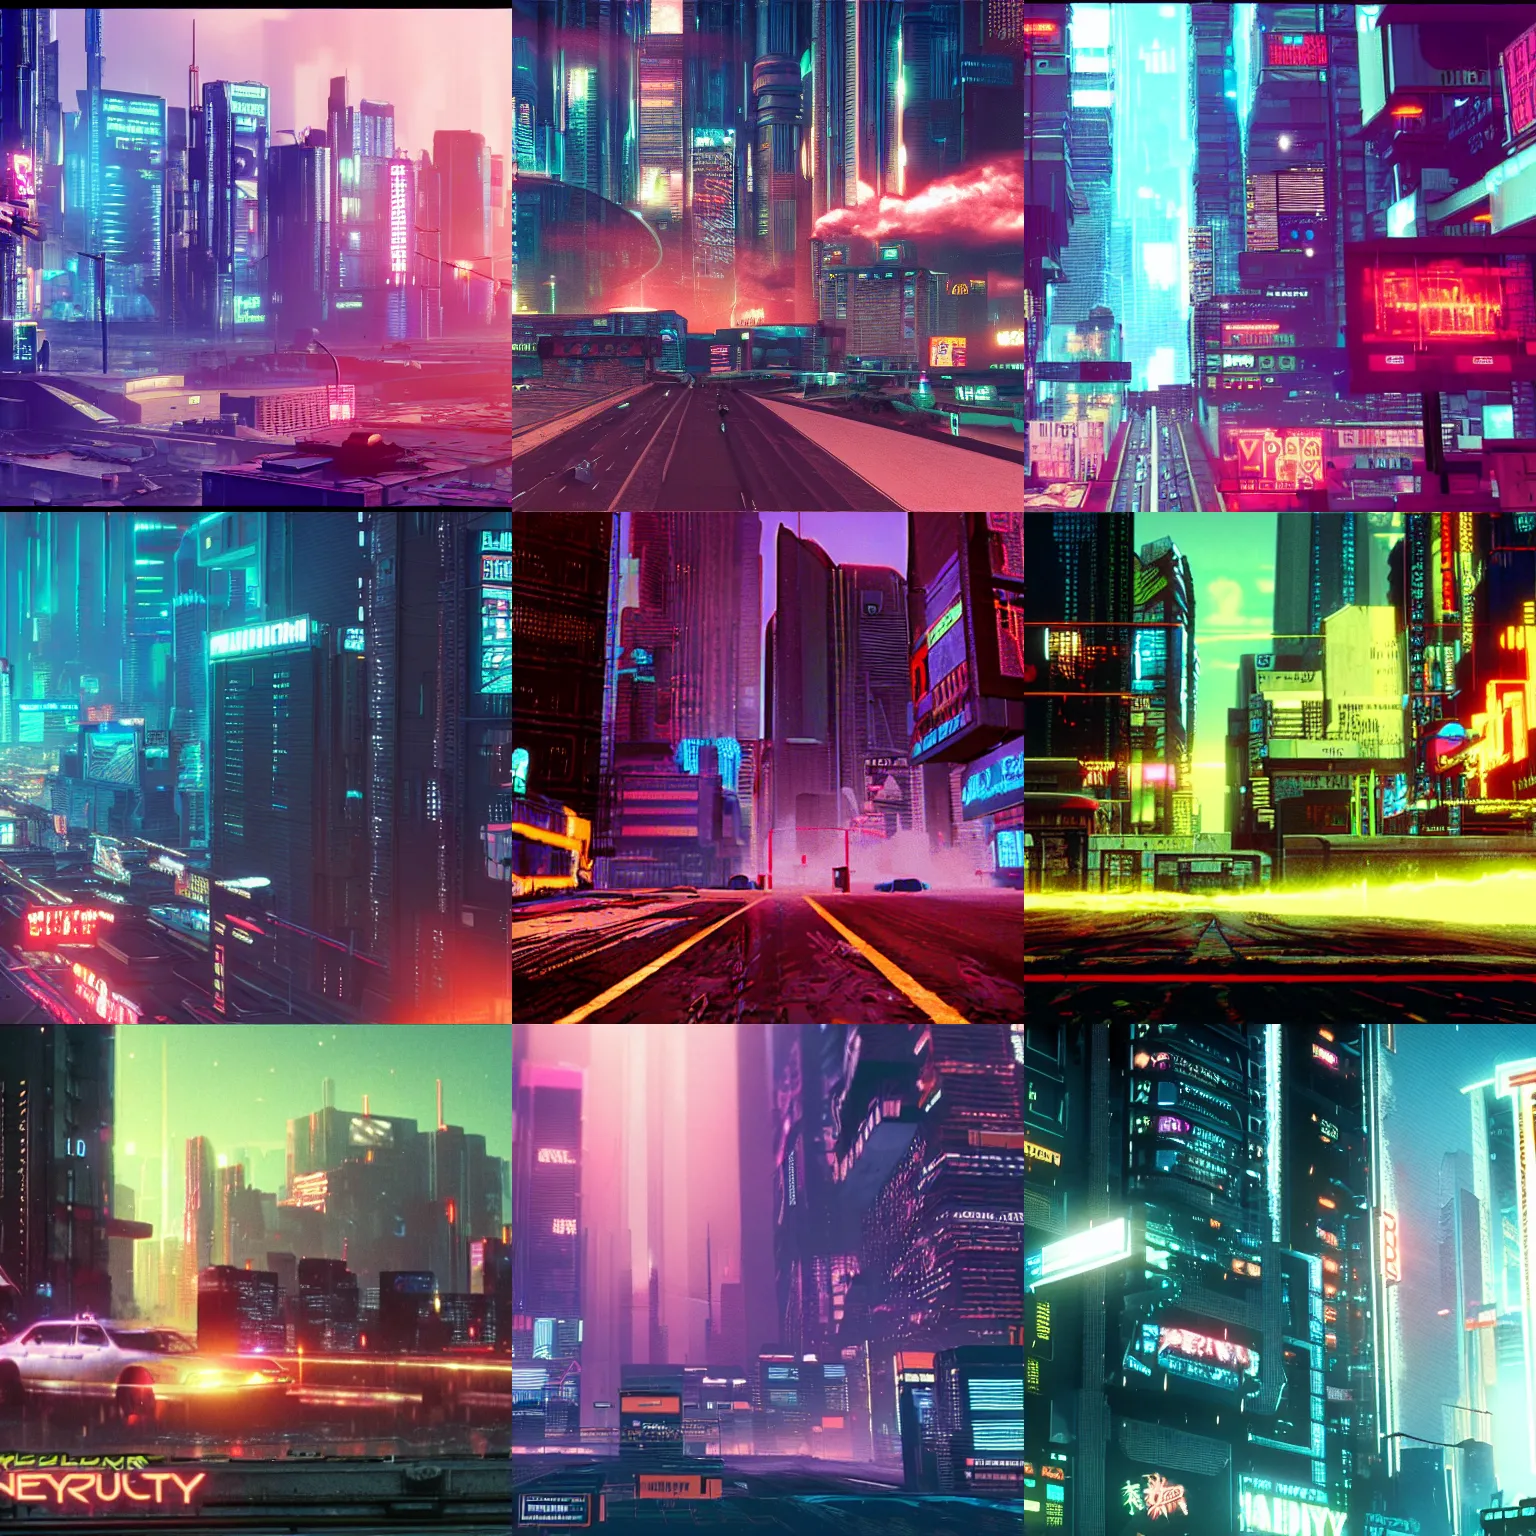 Prompt: vhs screenshot of cyberpunk city dystopian